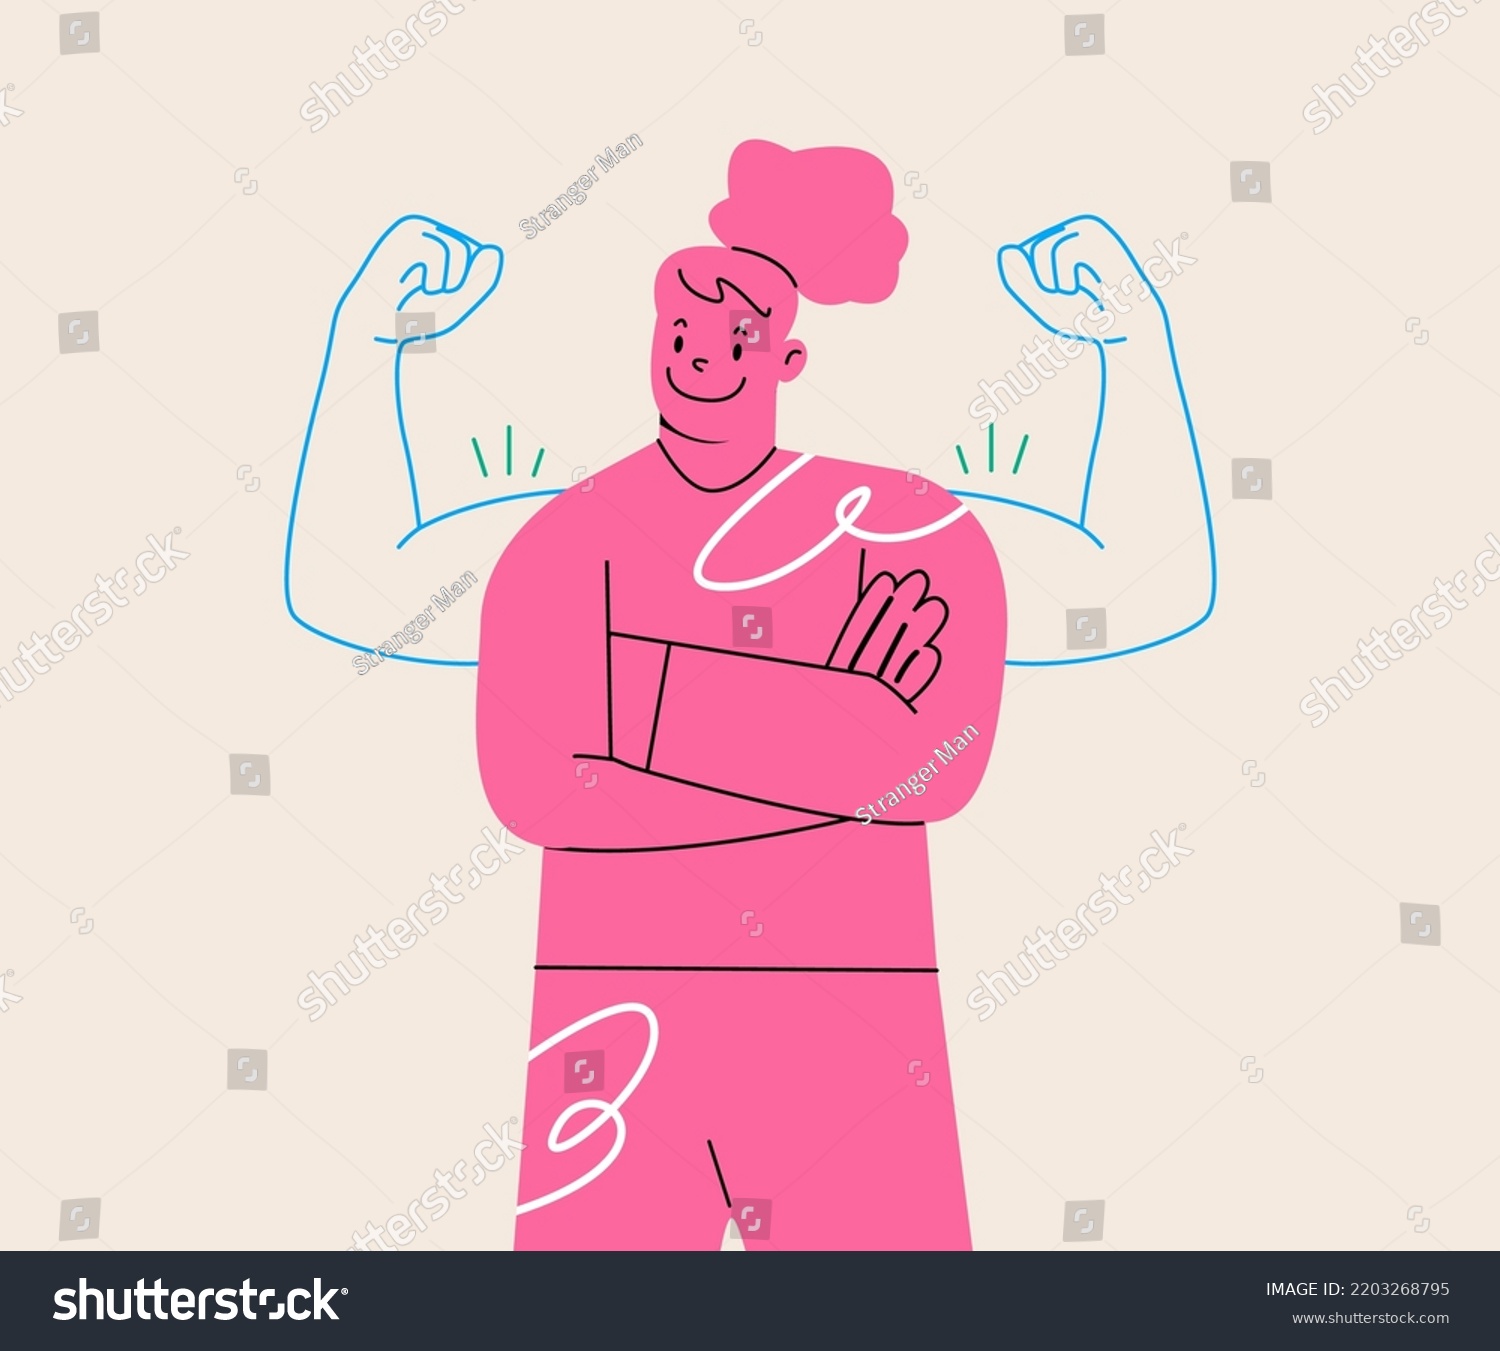 Woman power, woman self confidence, high esteem concept. Colorful vector illustration
 #2203268795